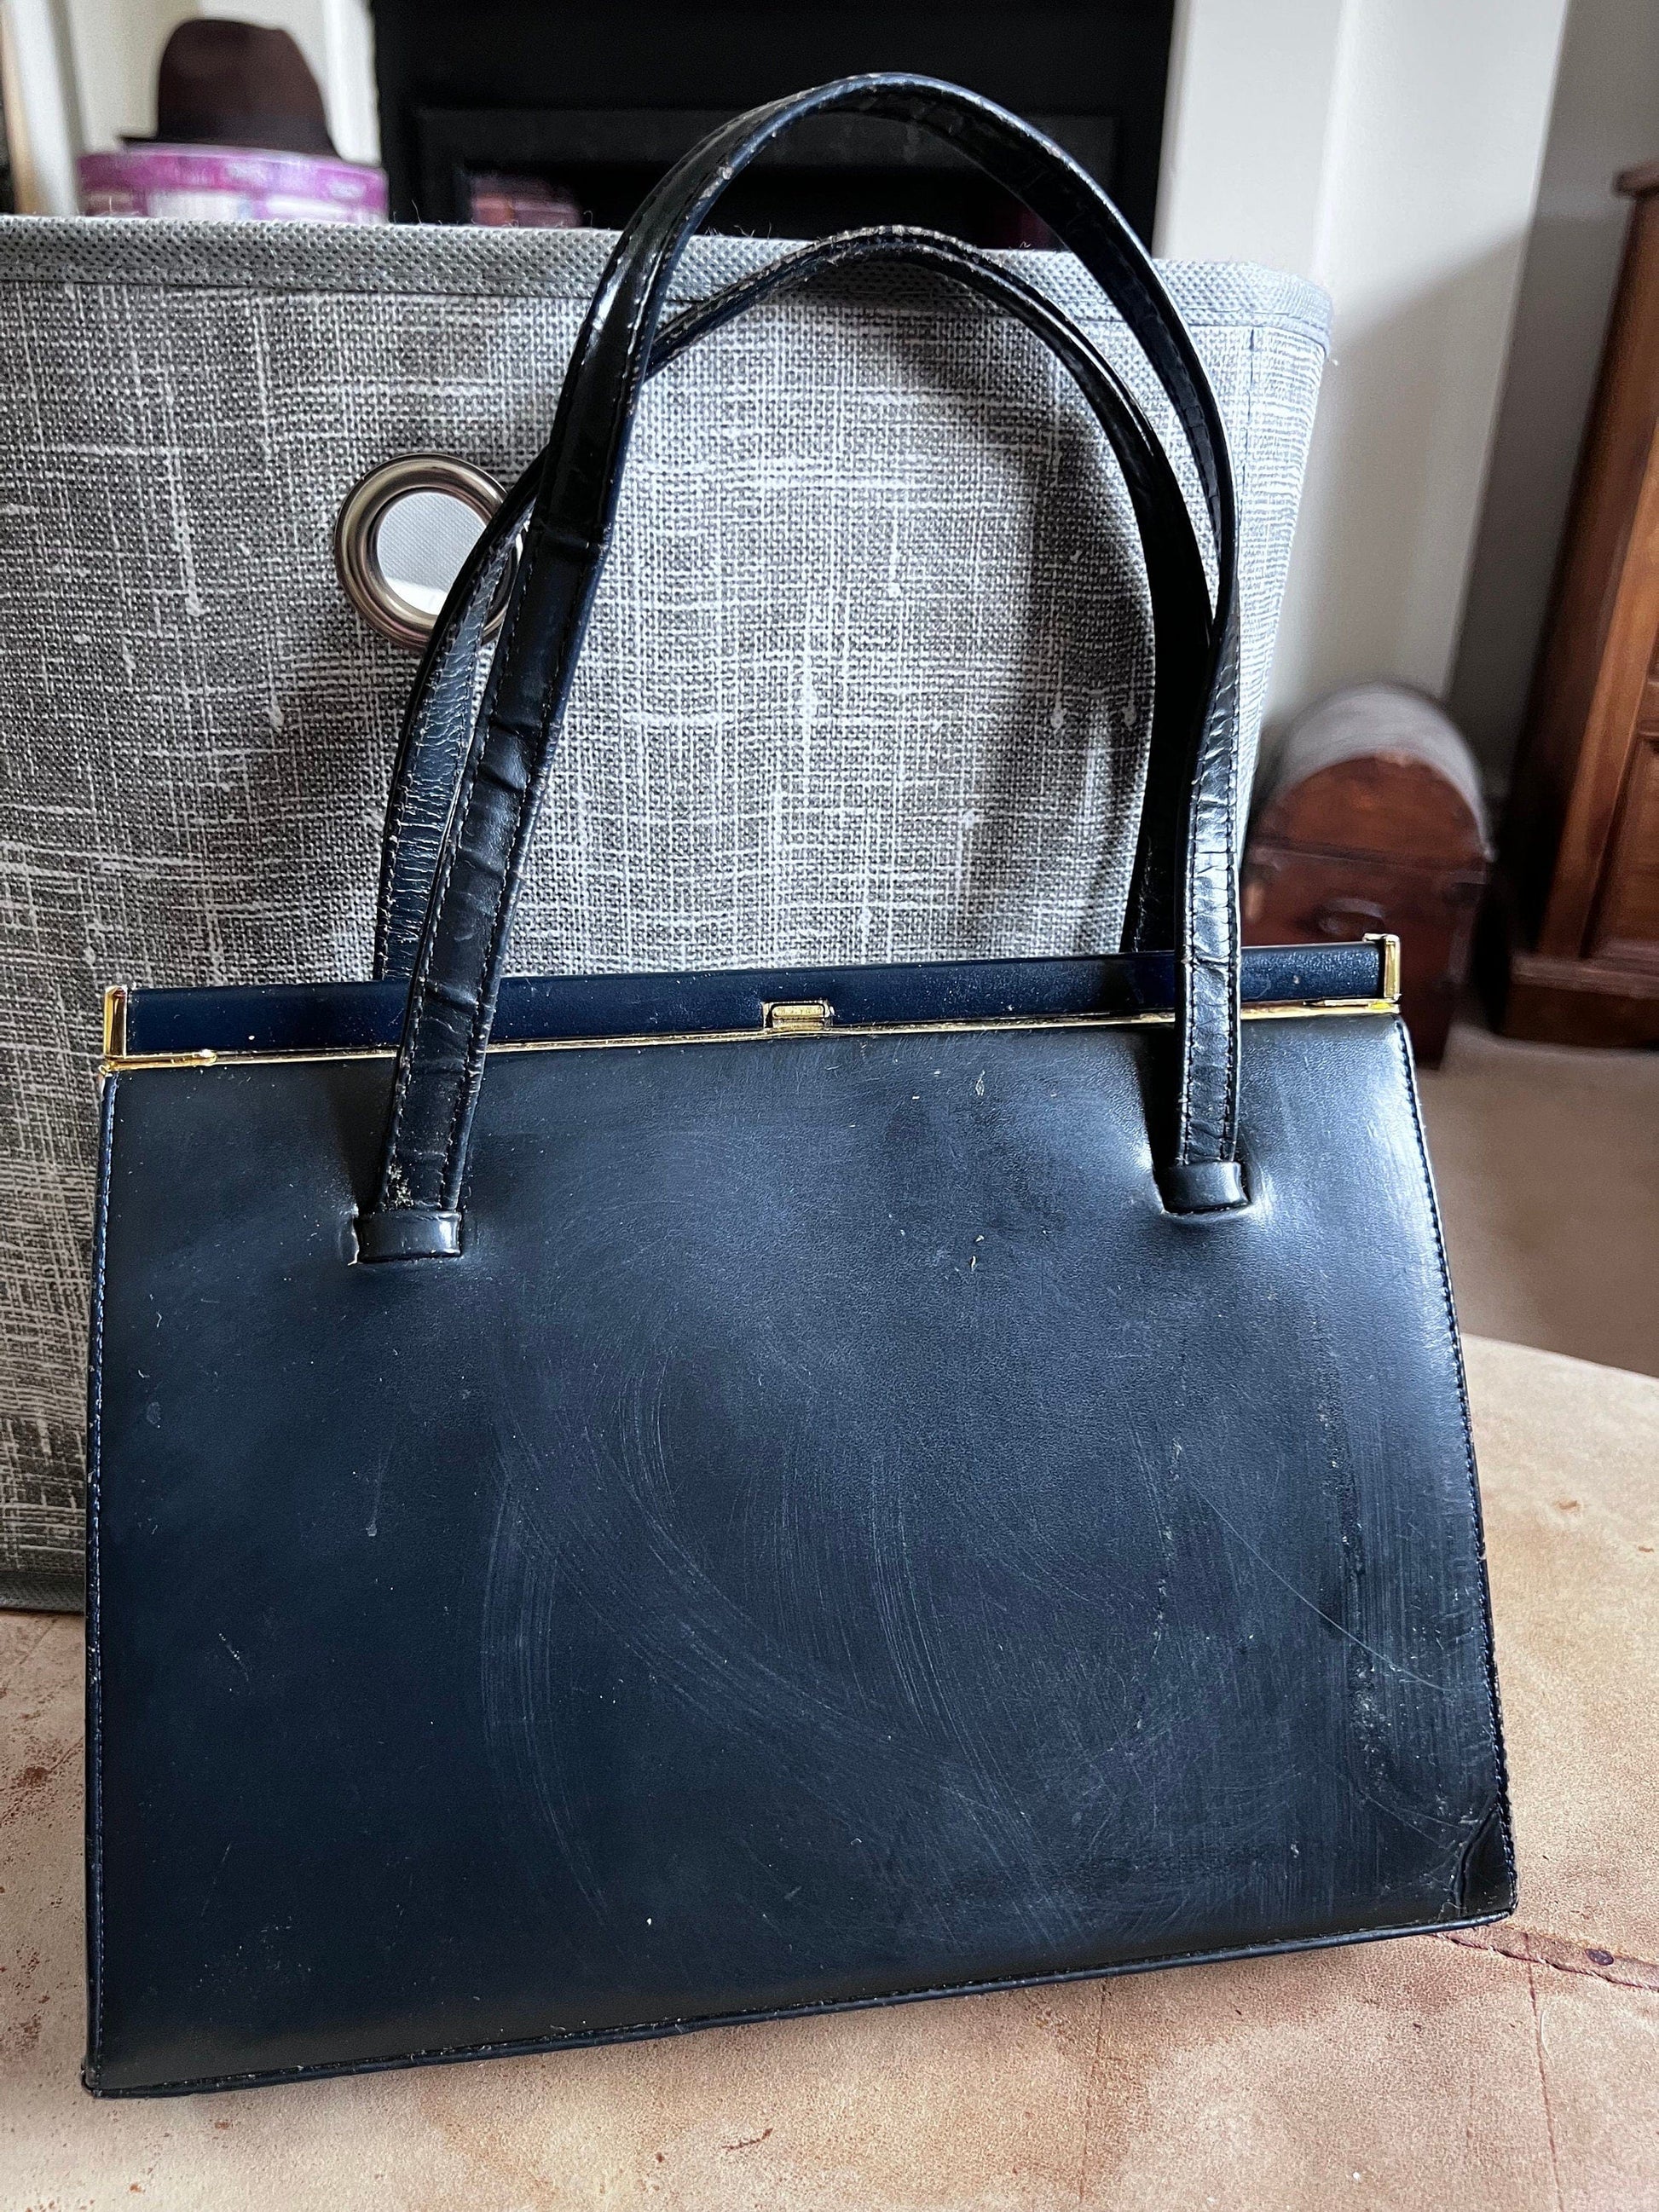 vintage black handbag black ladies bag 1960s vintage bag, gold coloured clasp,  small leather look, vinyl handbag 60s black bag, handbag